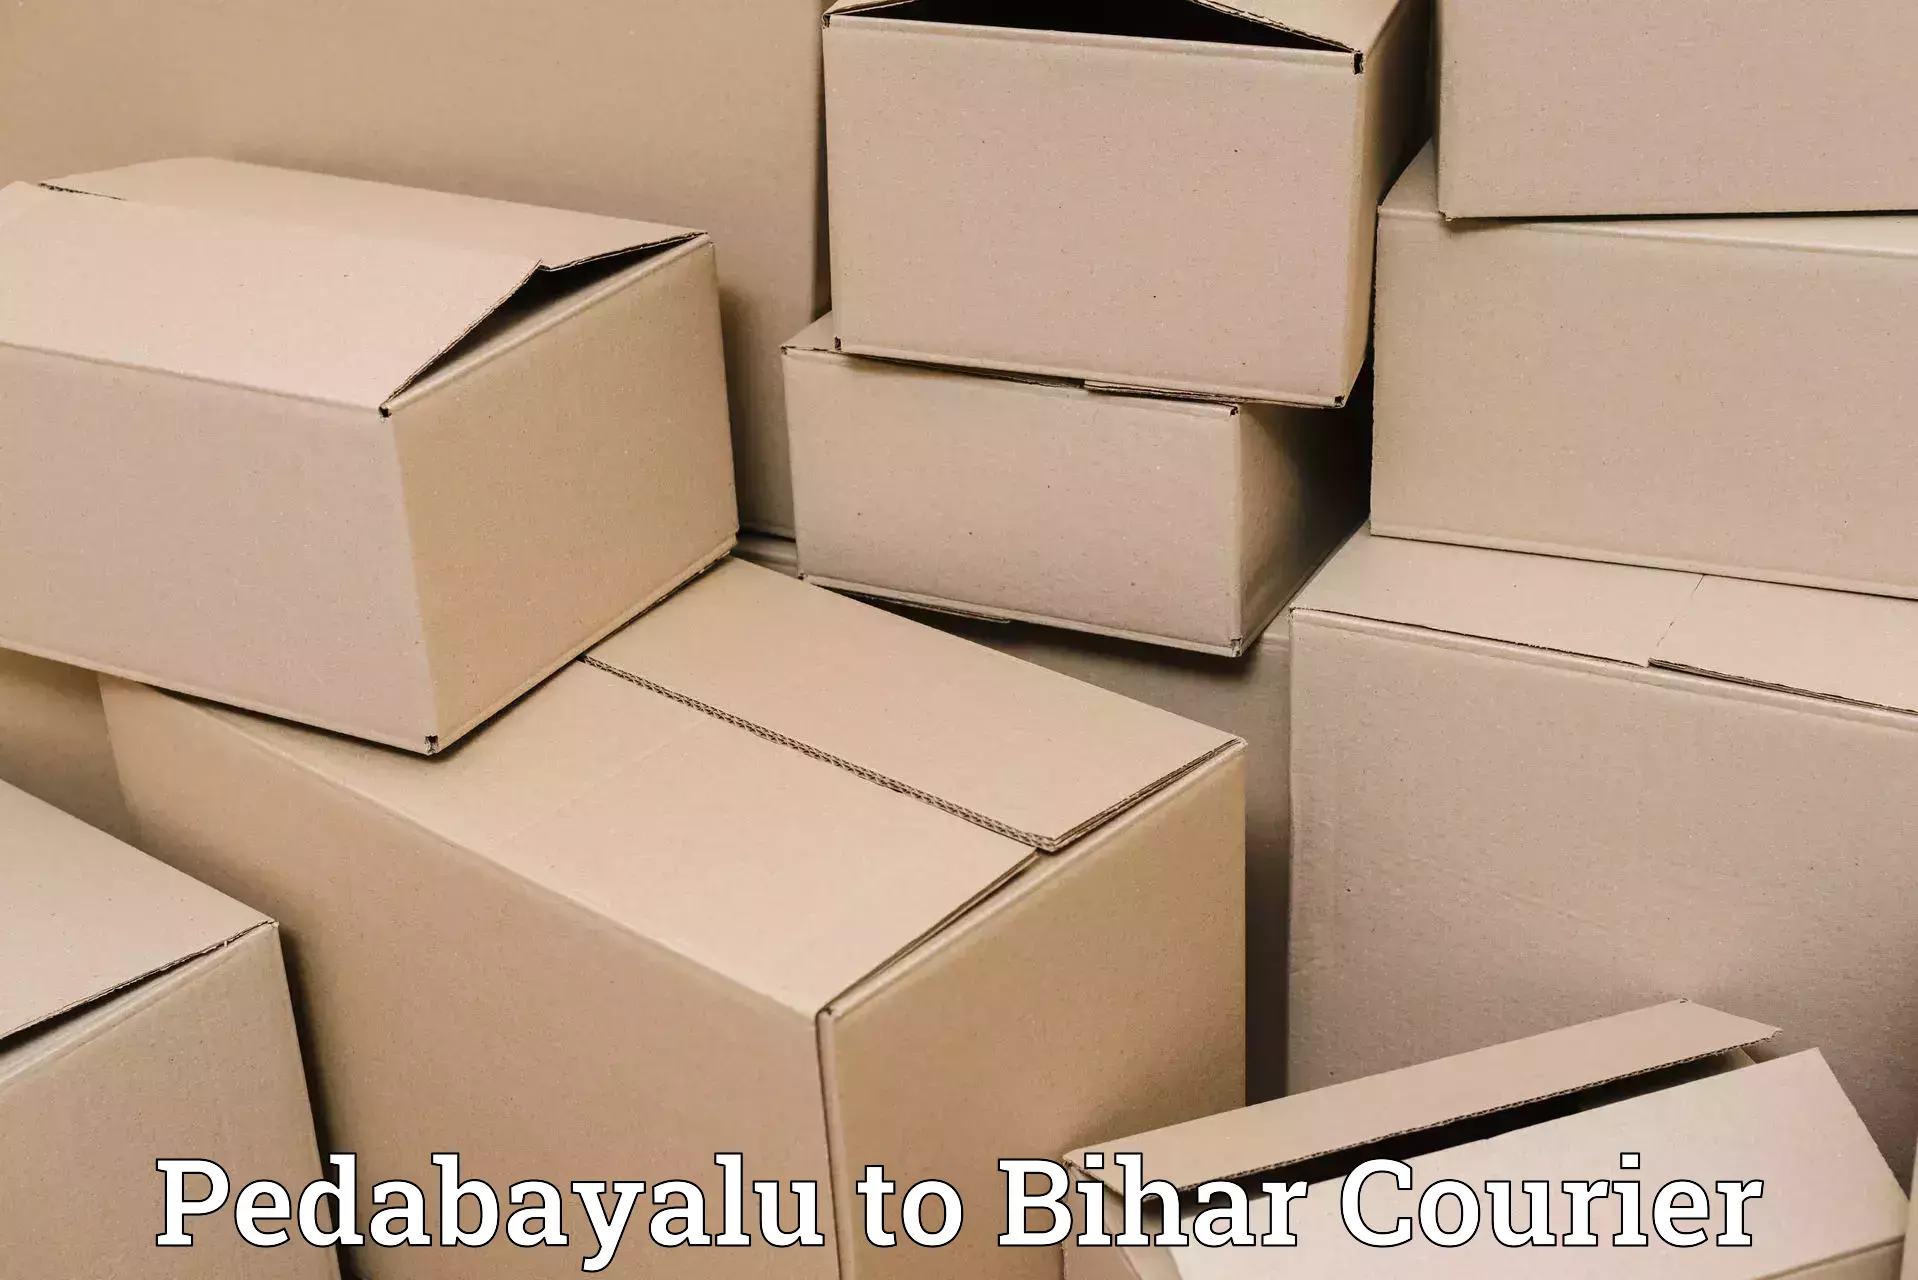 Courier service comparison Pedabayalu to Bagaha